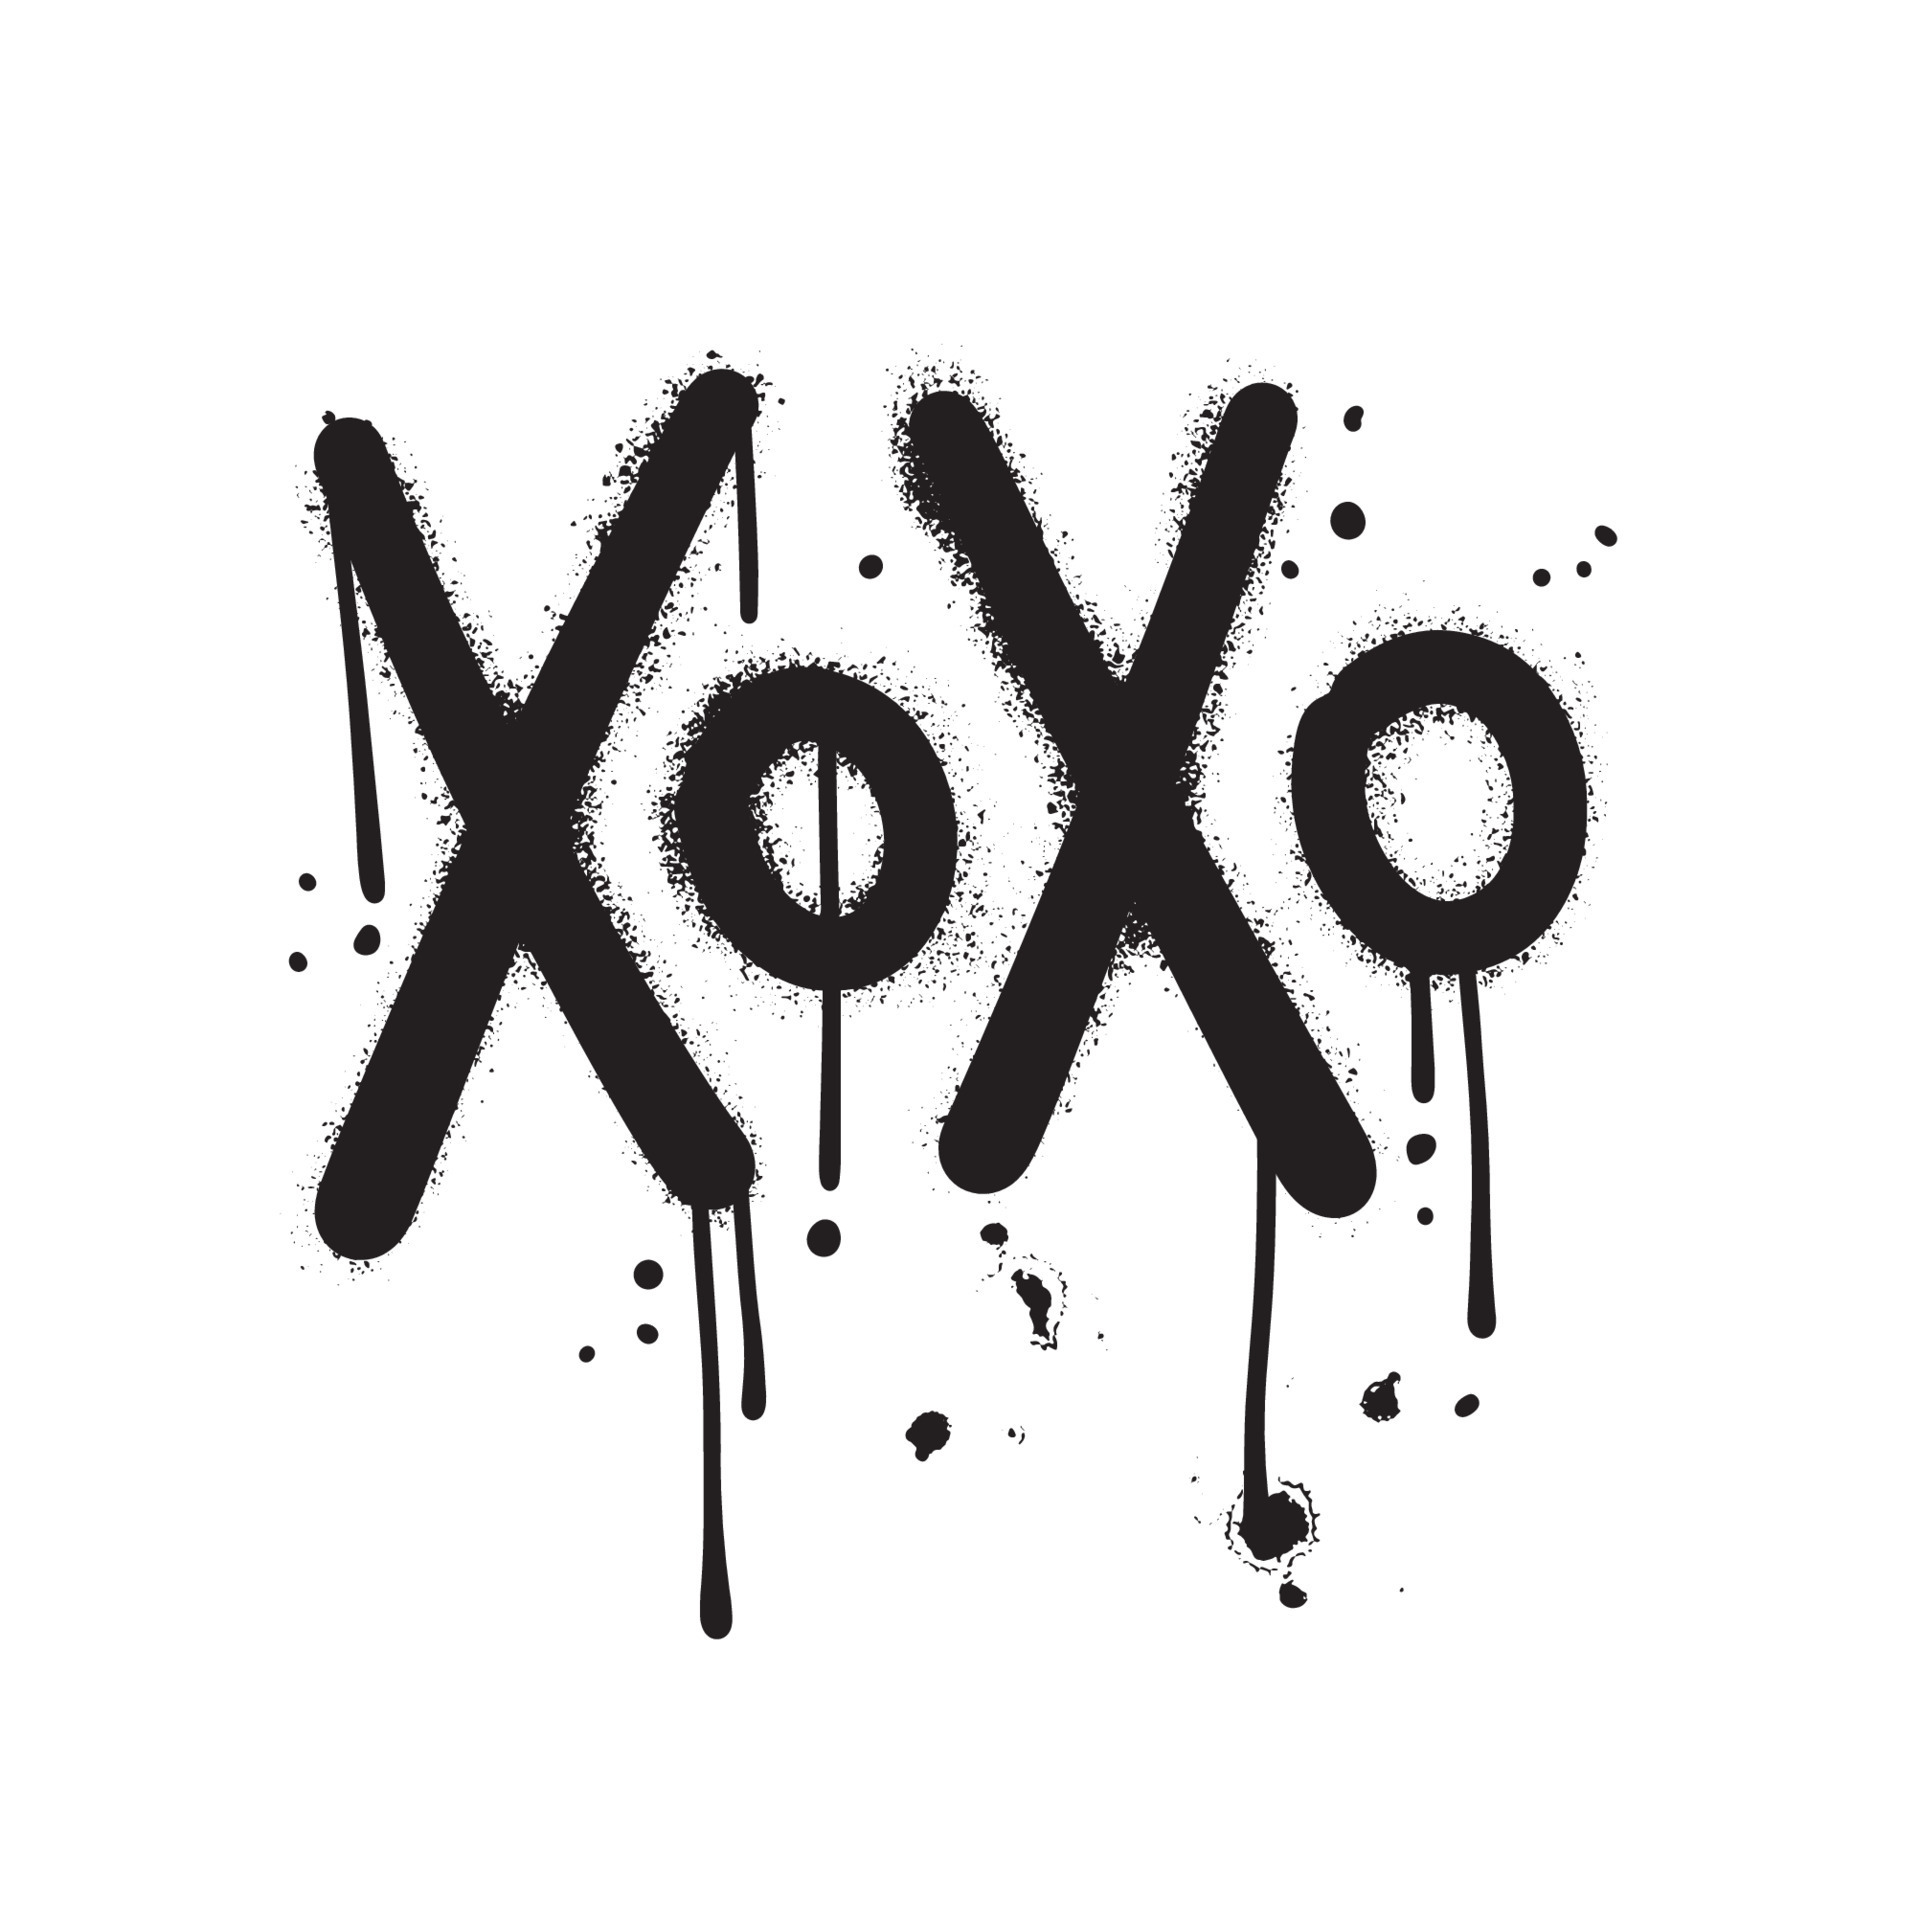 Urban graffiti XOXO sign sprayed in black over white. Kiss metaphor ...